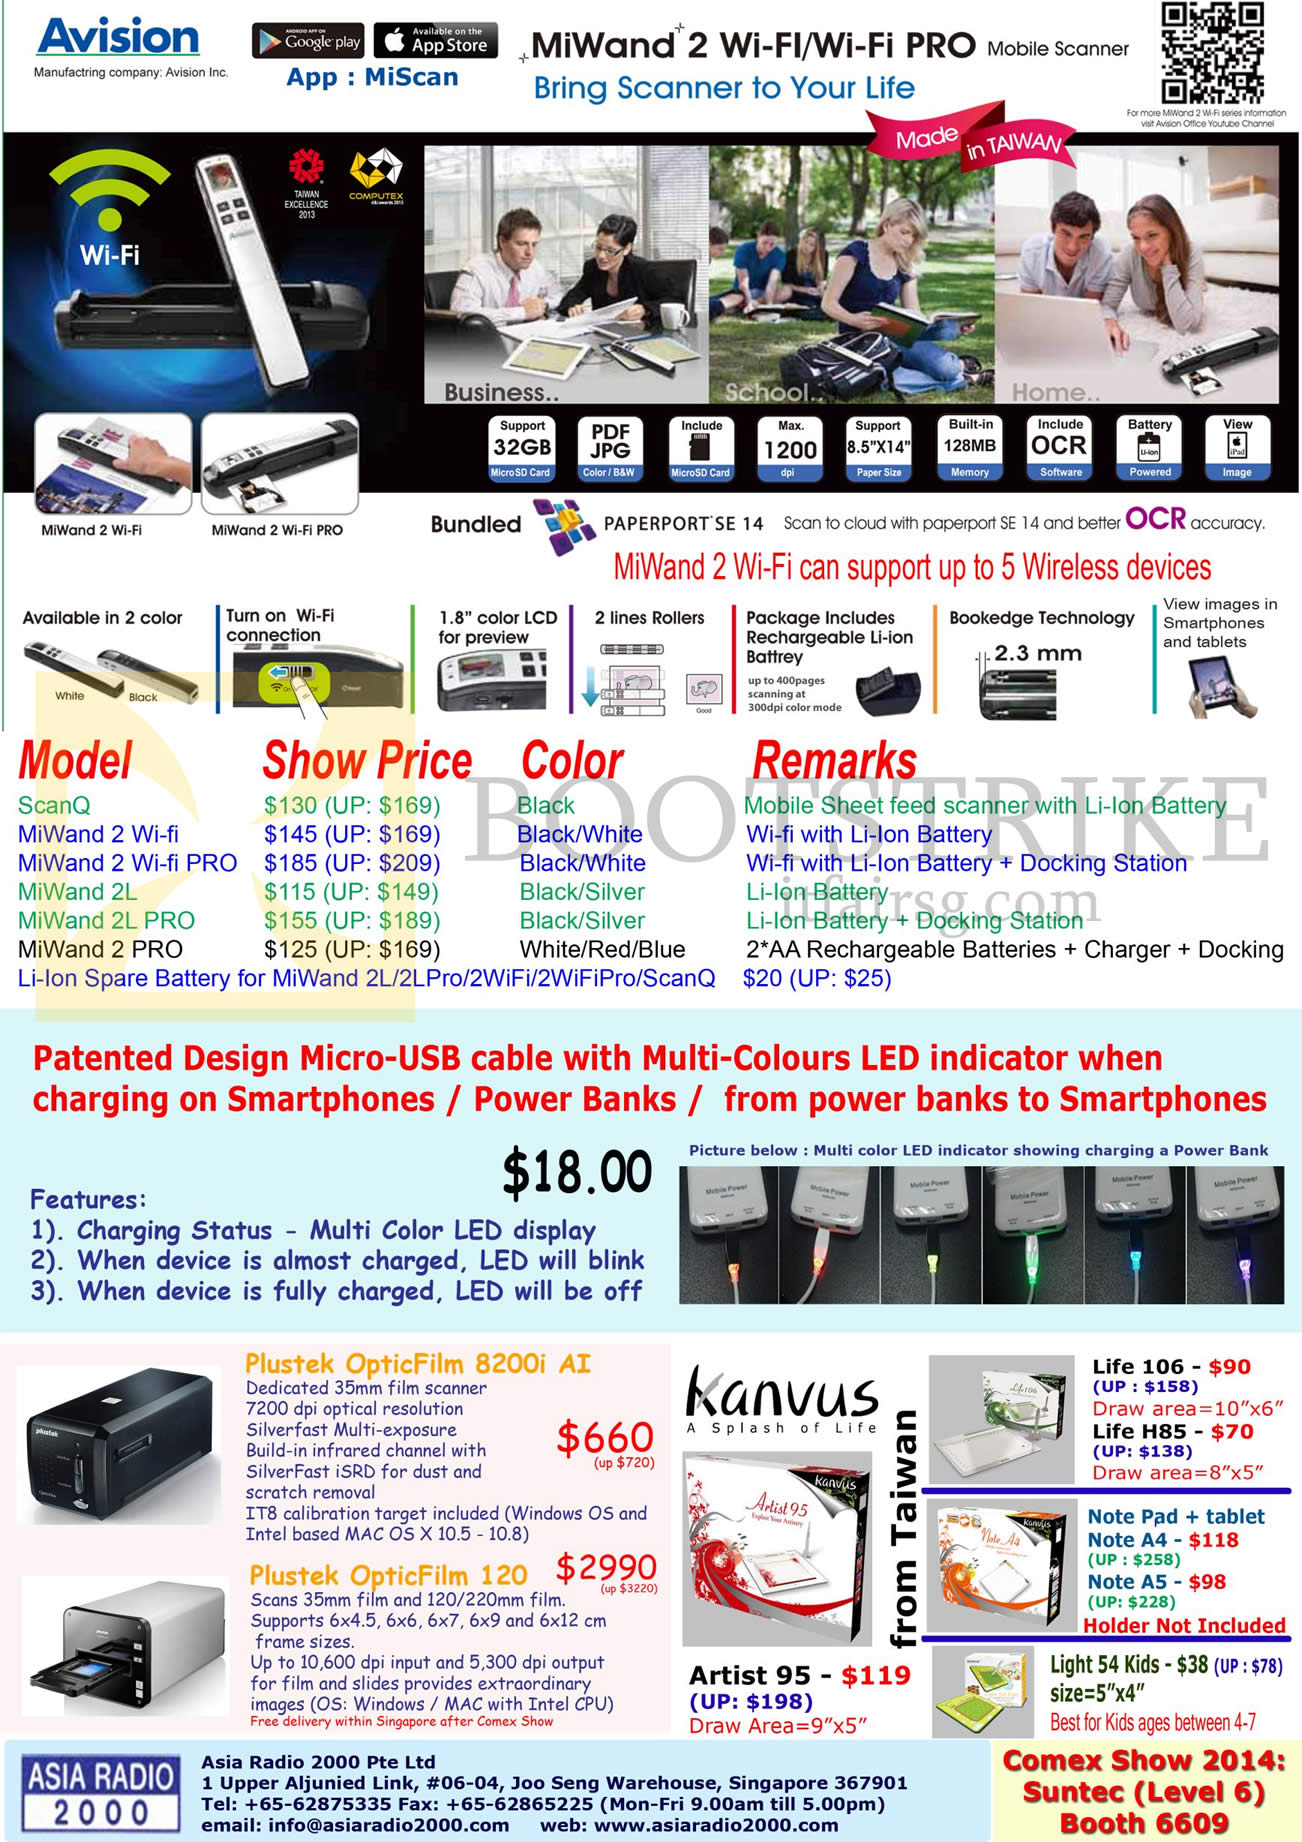 COMEX 2014 price list image brochure of Asia Radio Avision Scanners MiWand 2 Wi-Fi Pro, ScanQ, Film Scanner Plustek OpticFilm 8200i AI, OpticFilm 120, Kanvus Life, Artist 95, Note Pad